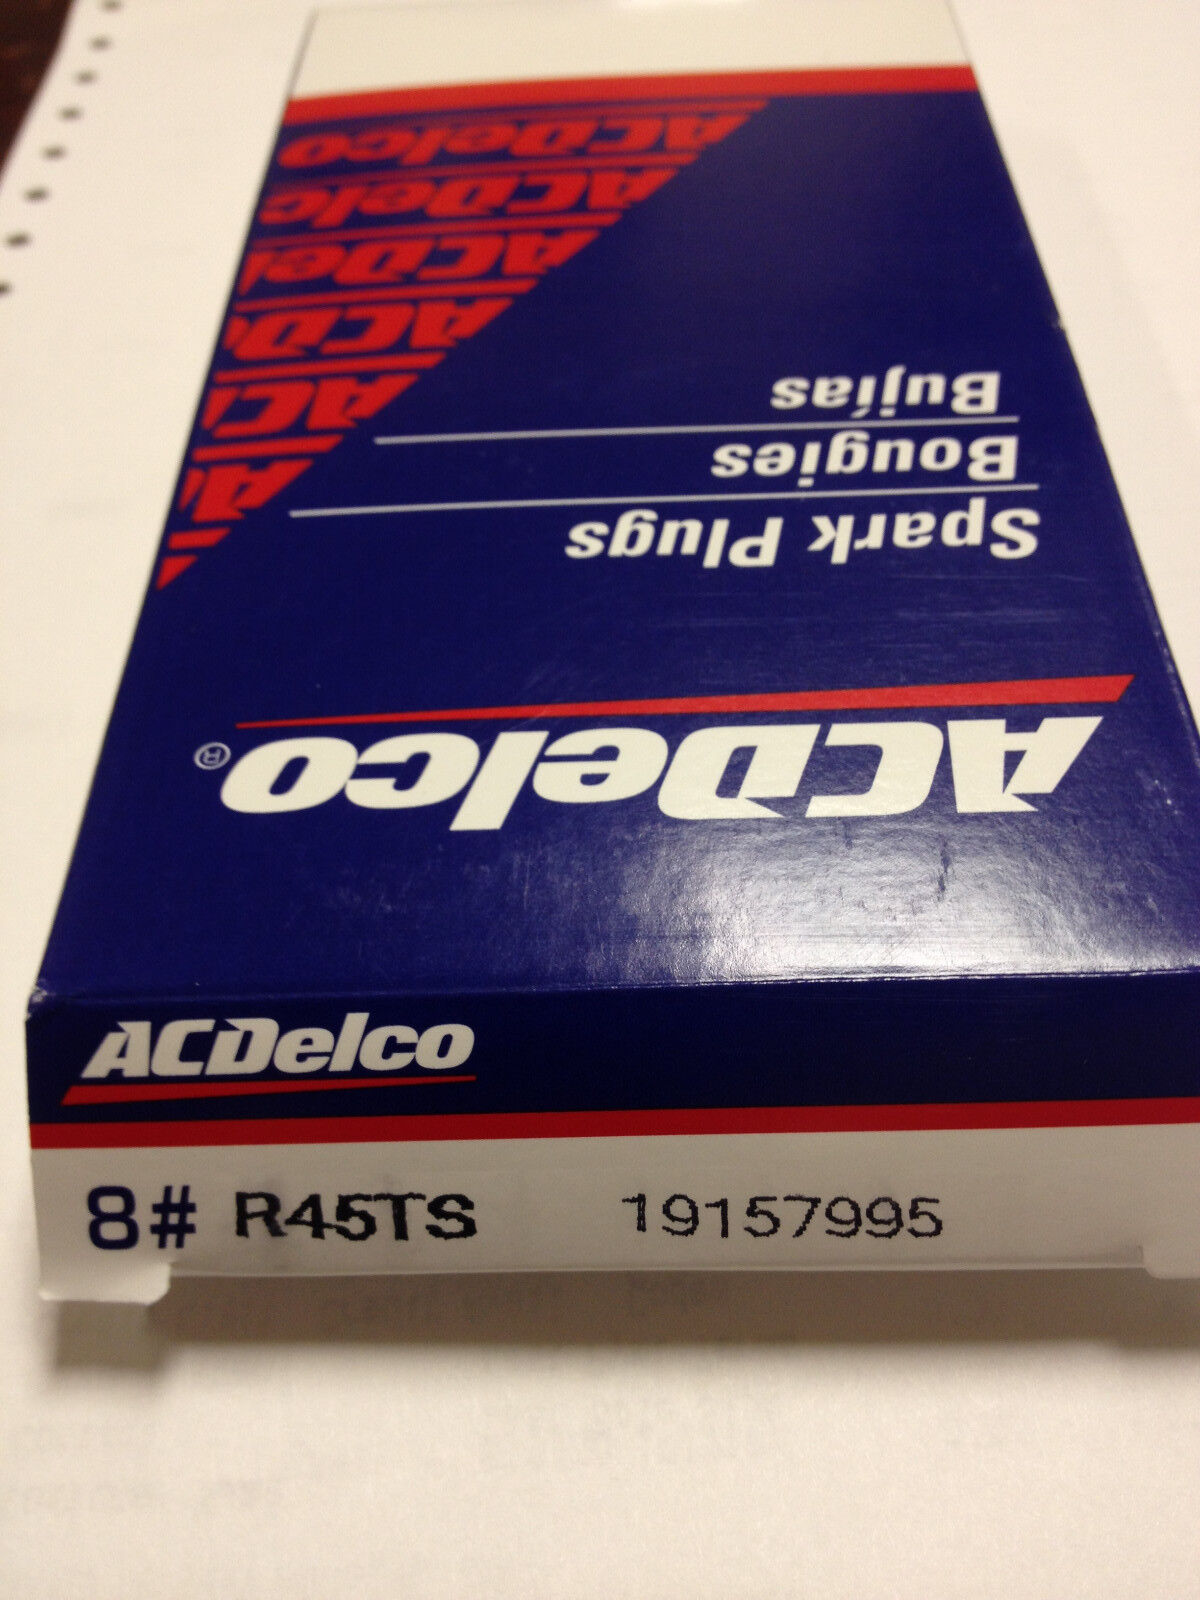 AcDelco Spark Plug R45TS in Original Box set of 8 Spark Plugs 19157995